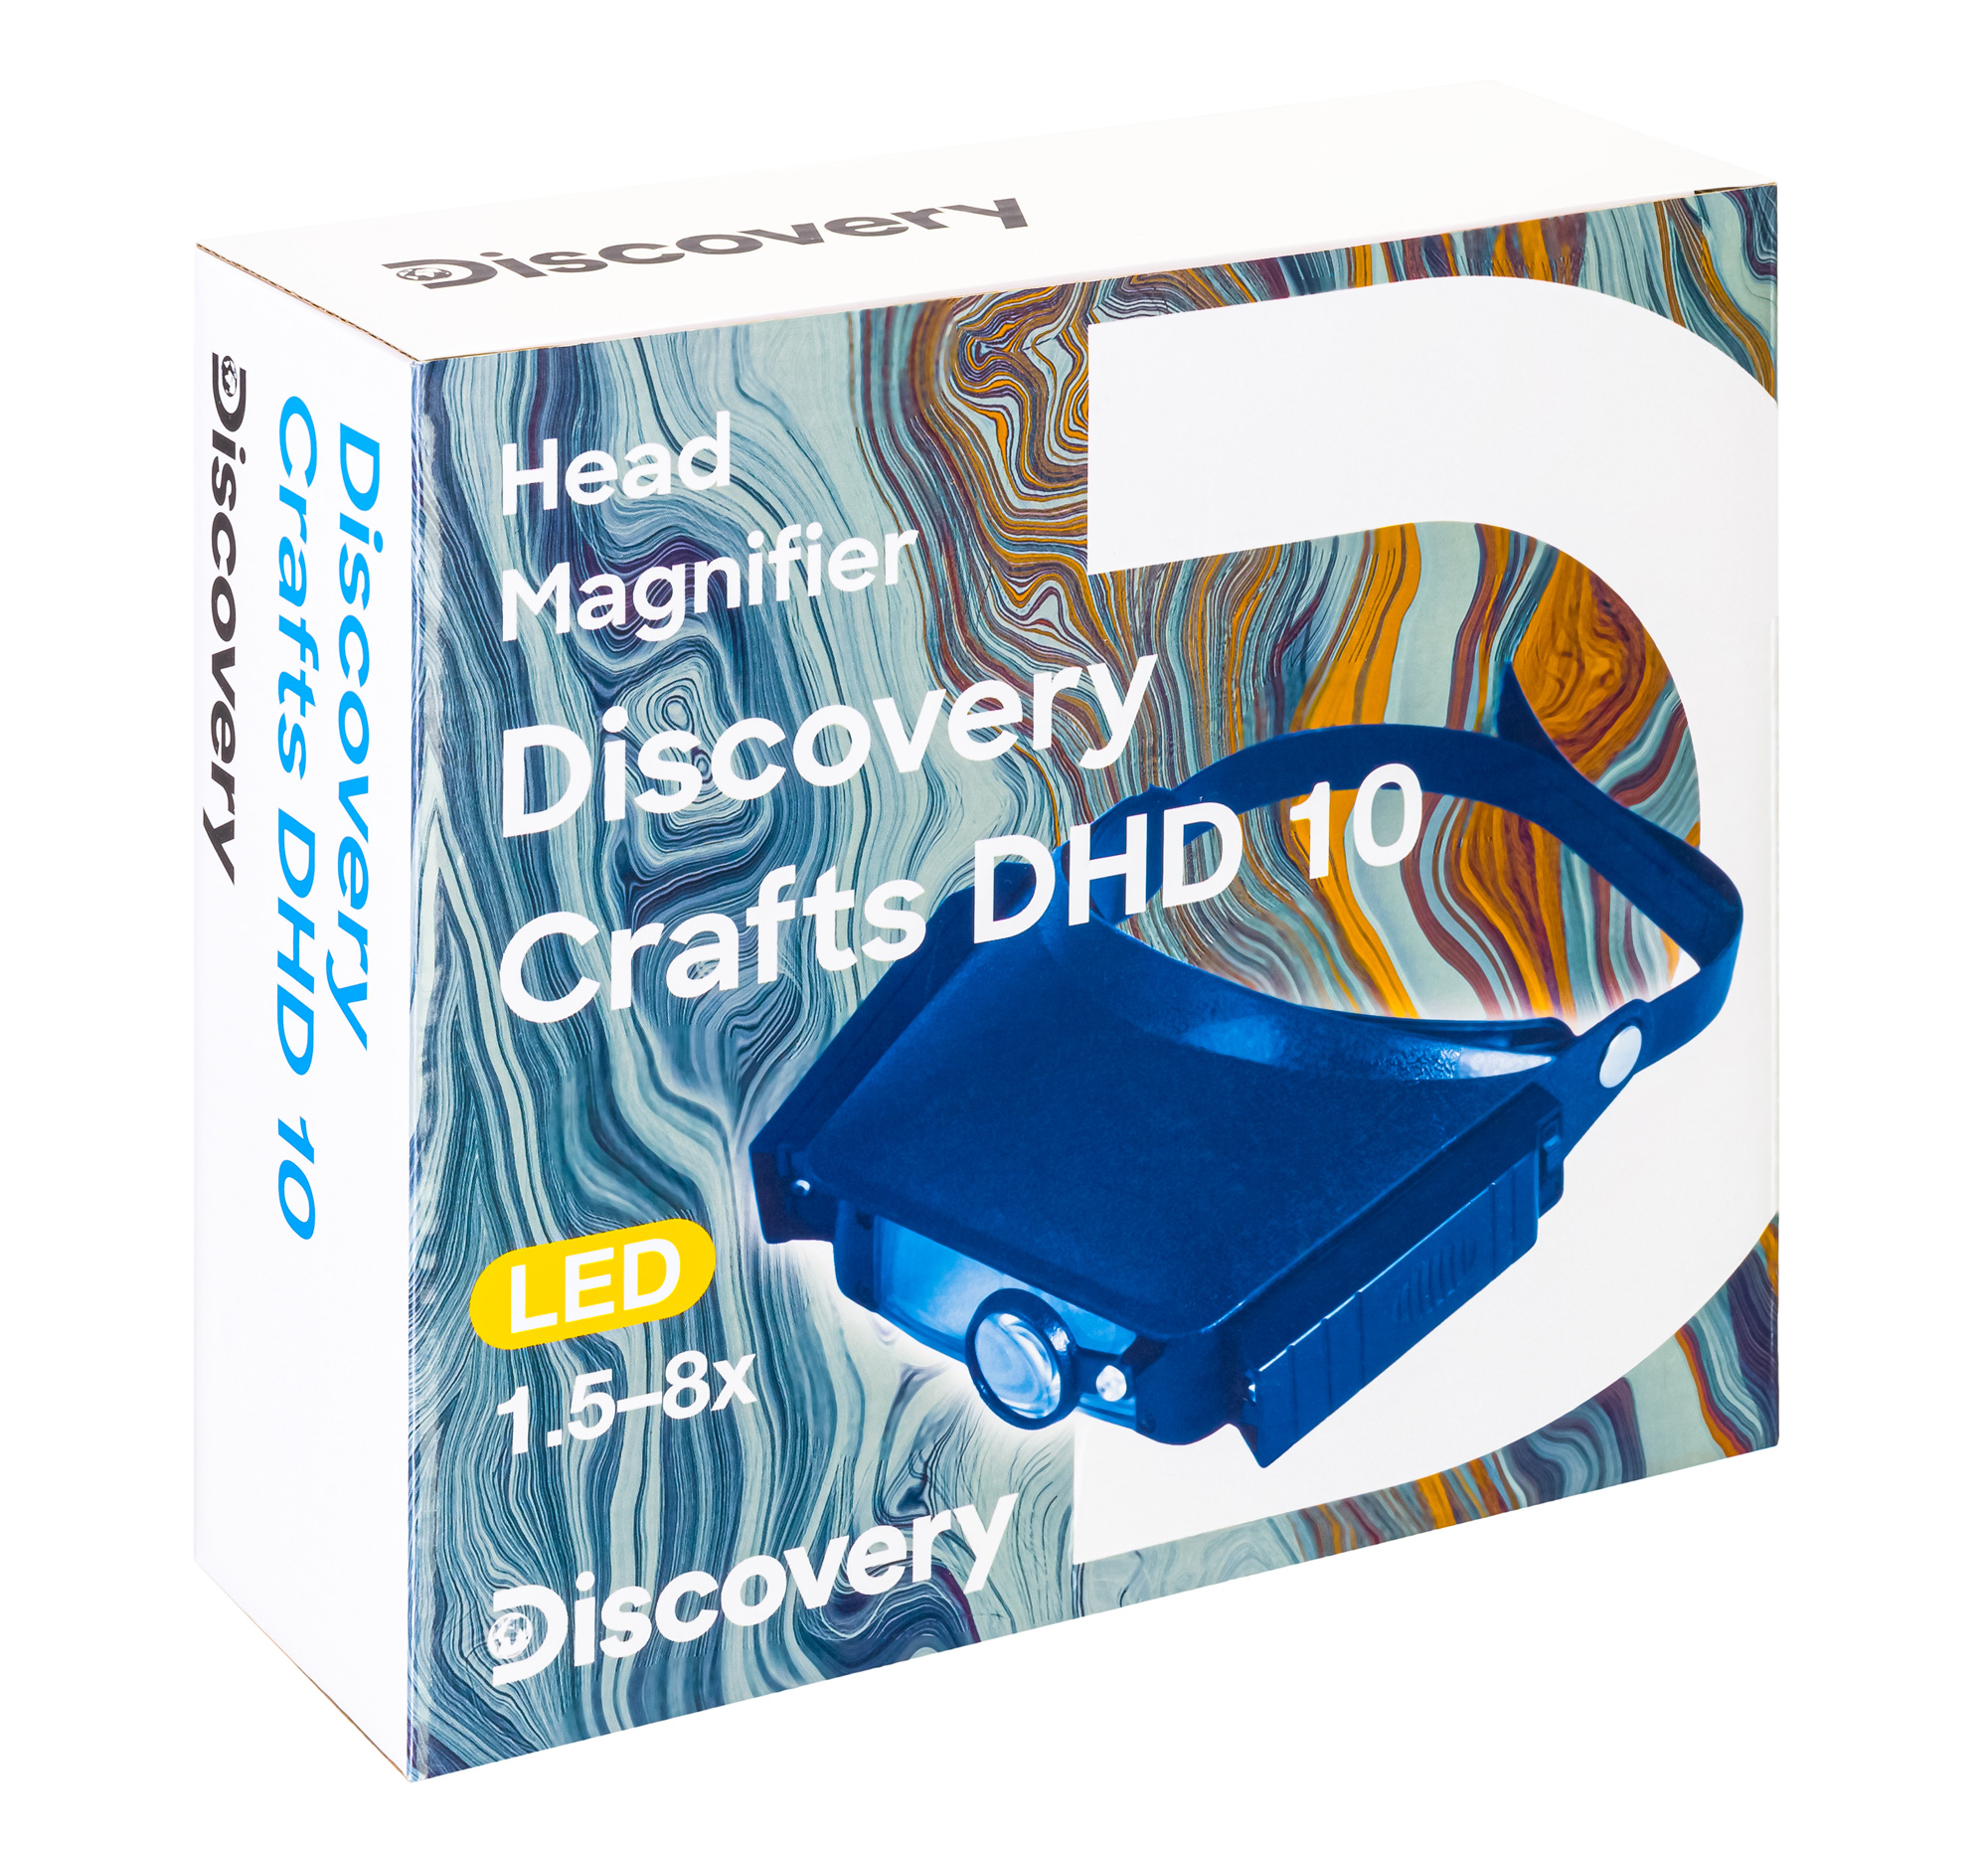  Лупа налобная Discovery Crafts DHD 10